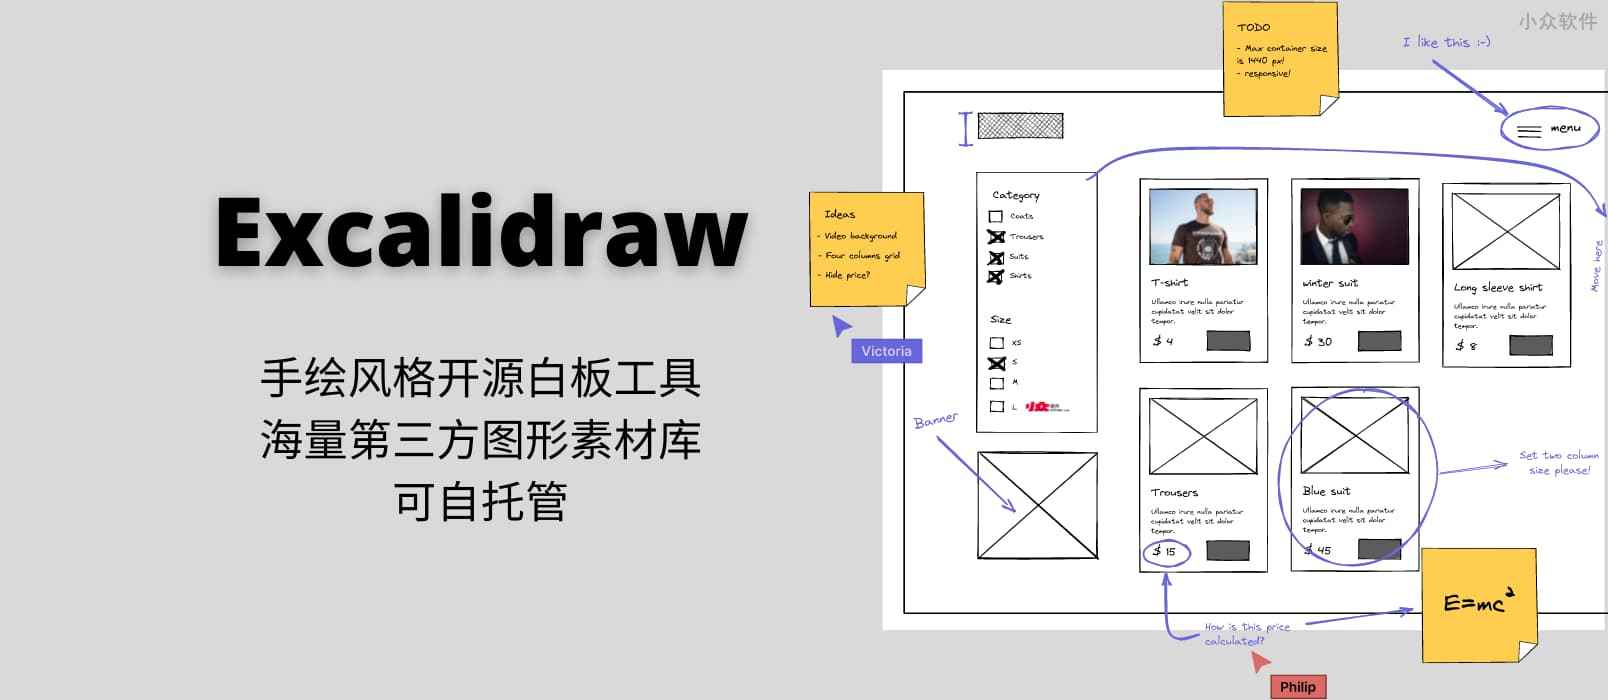 Excalidraw - 手绘风格的开源白板工具，海量第三方图形素材库，可自托管